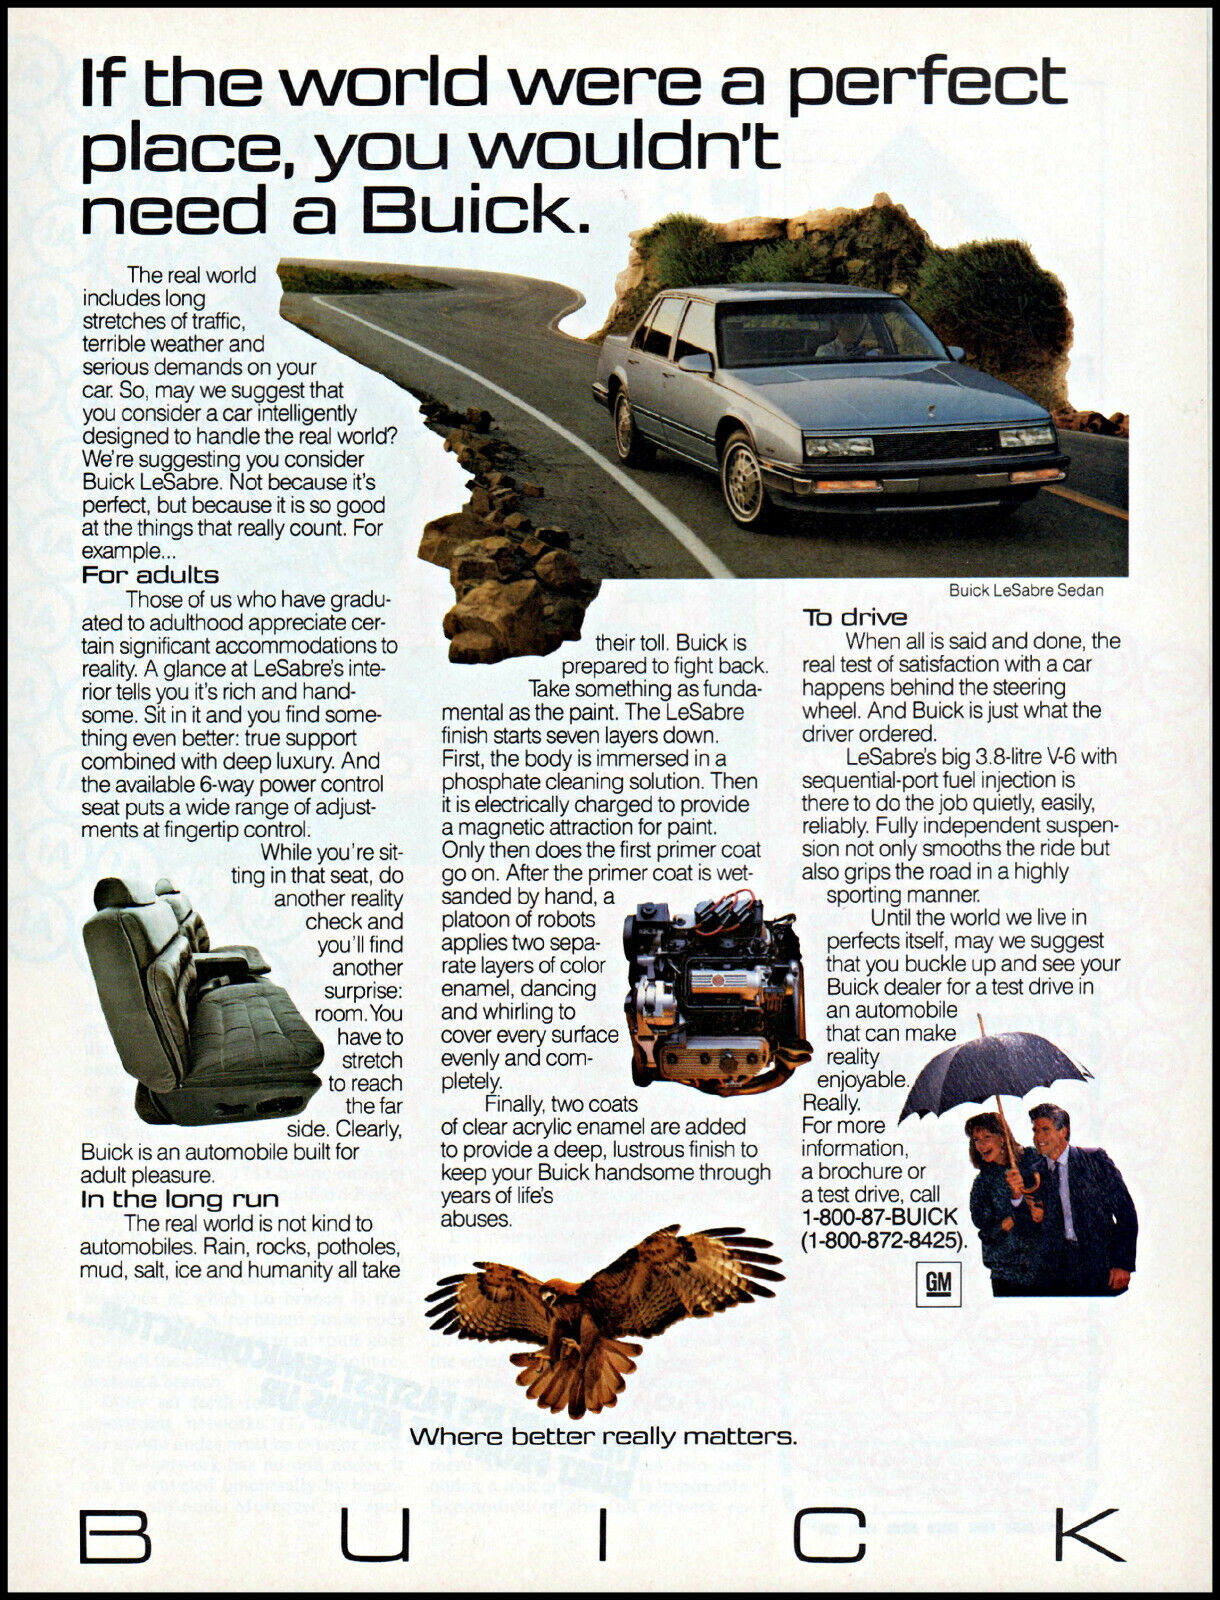 1986 Buick LeSabre car road eagle couple umbrella vintage photo print ad ads50